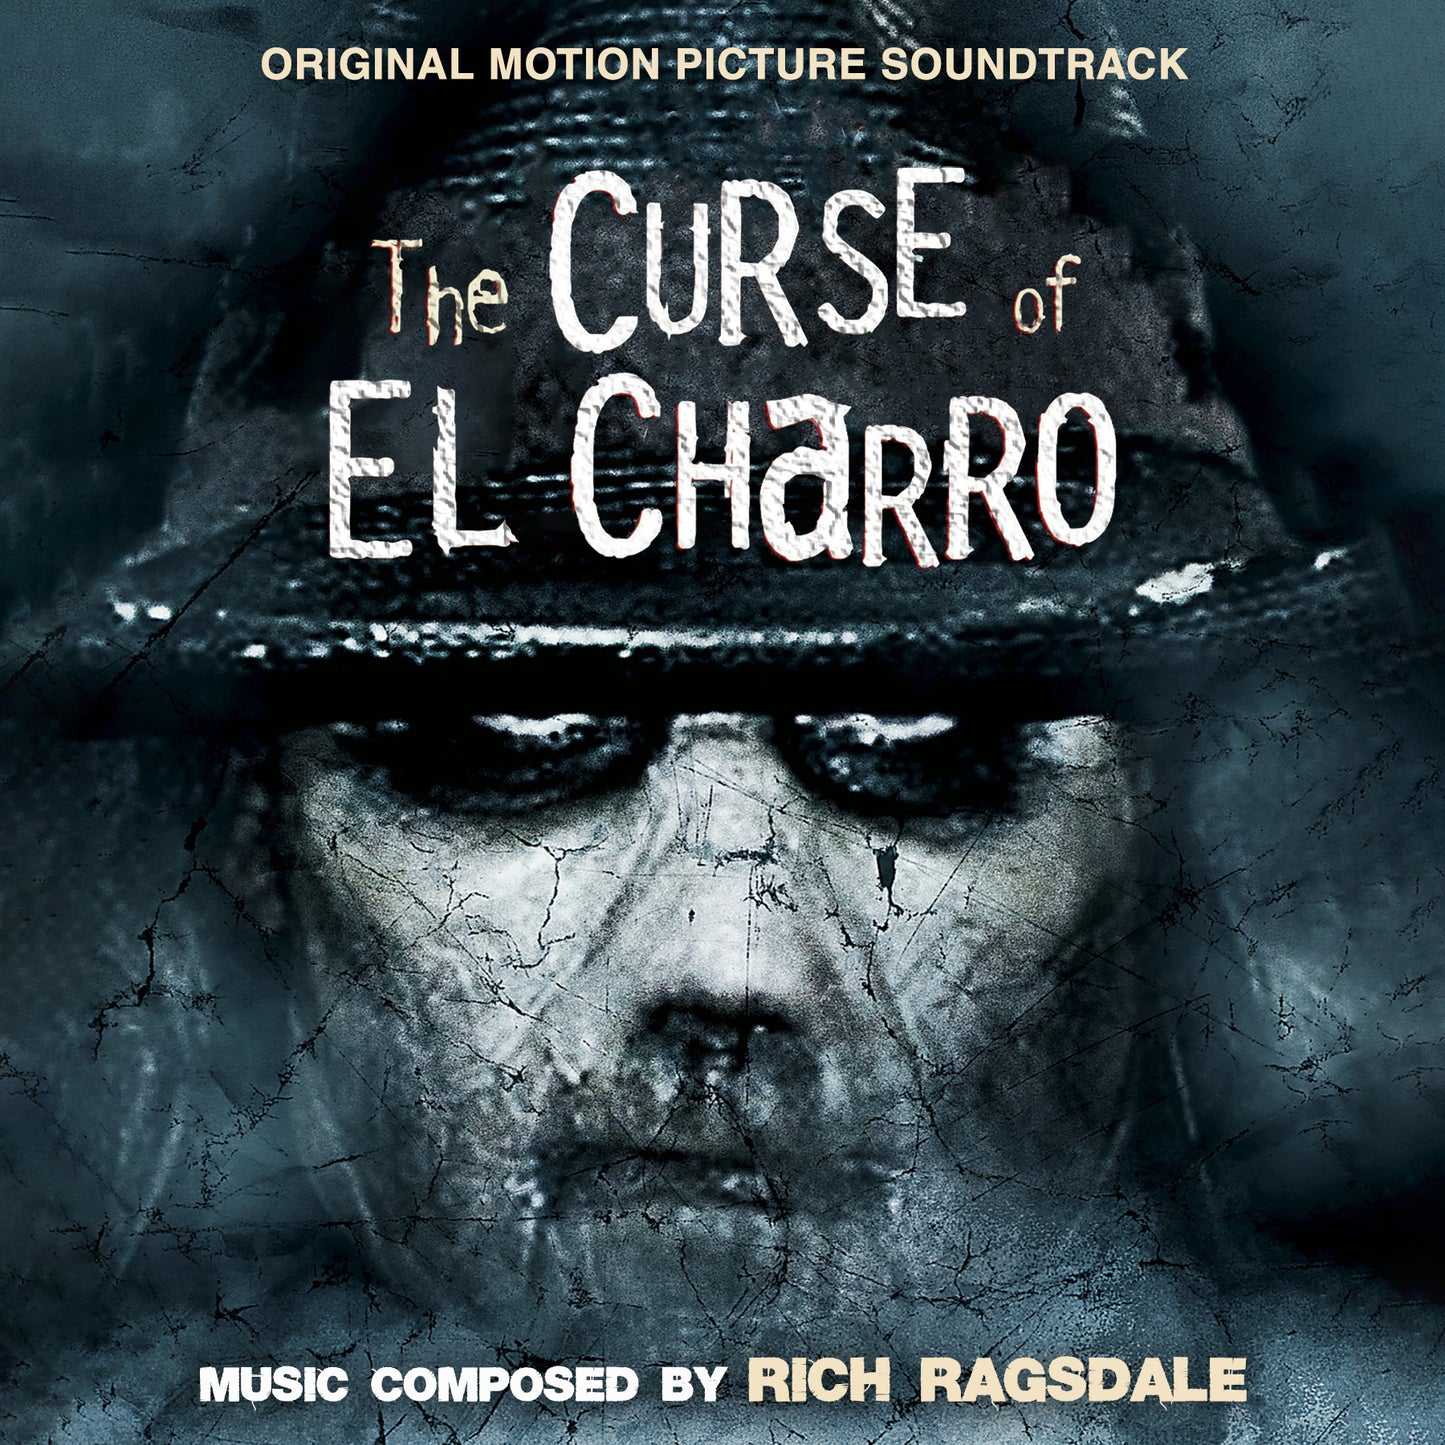 THE CURSE OF EL CHARRO - Original Soundtrack by Rich Ragsdale